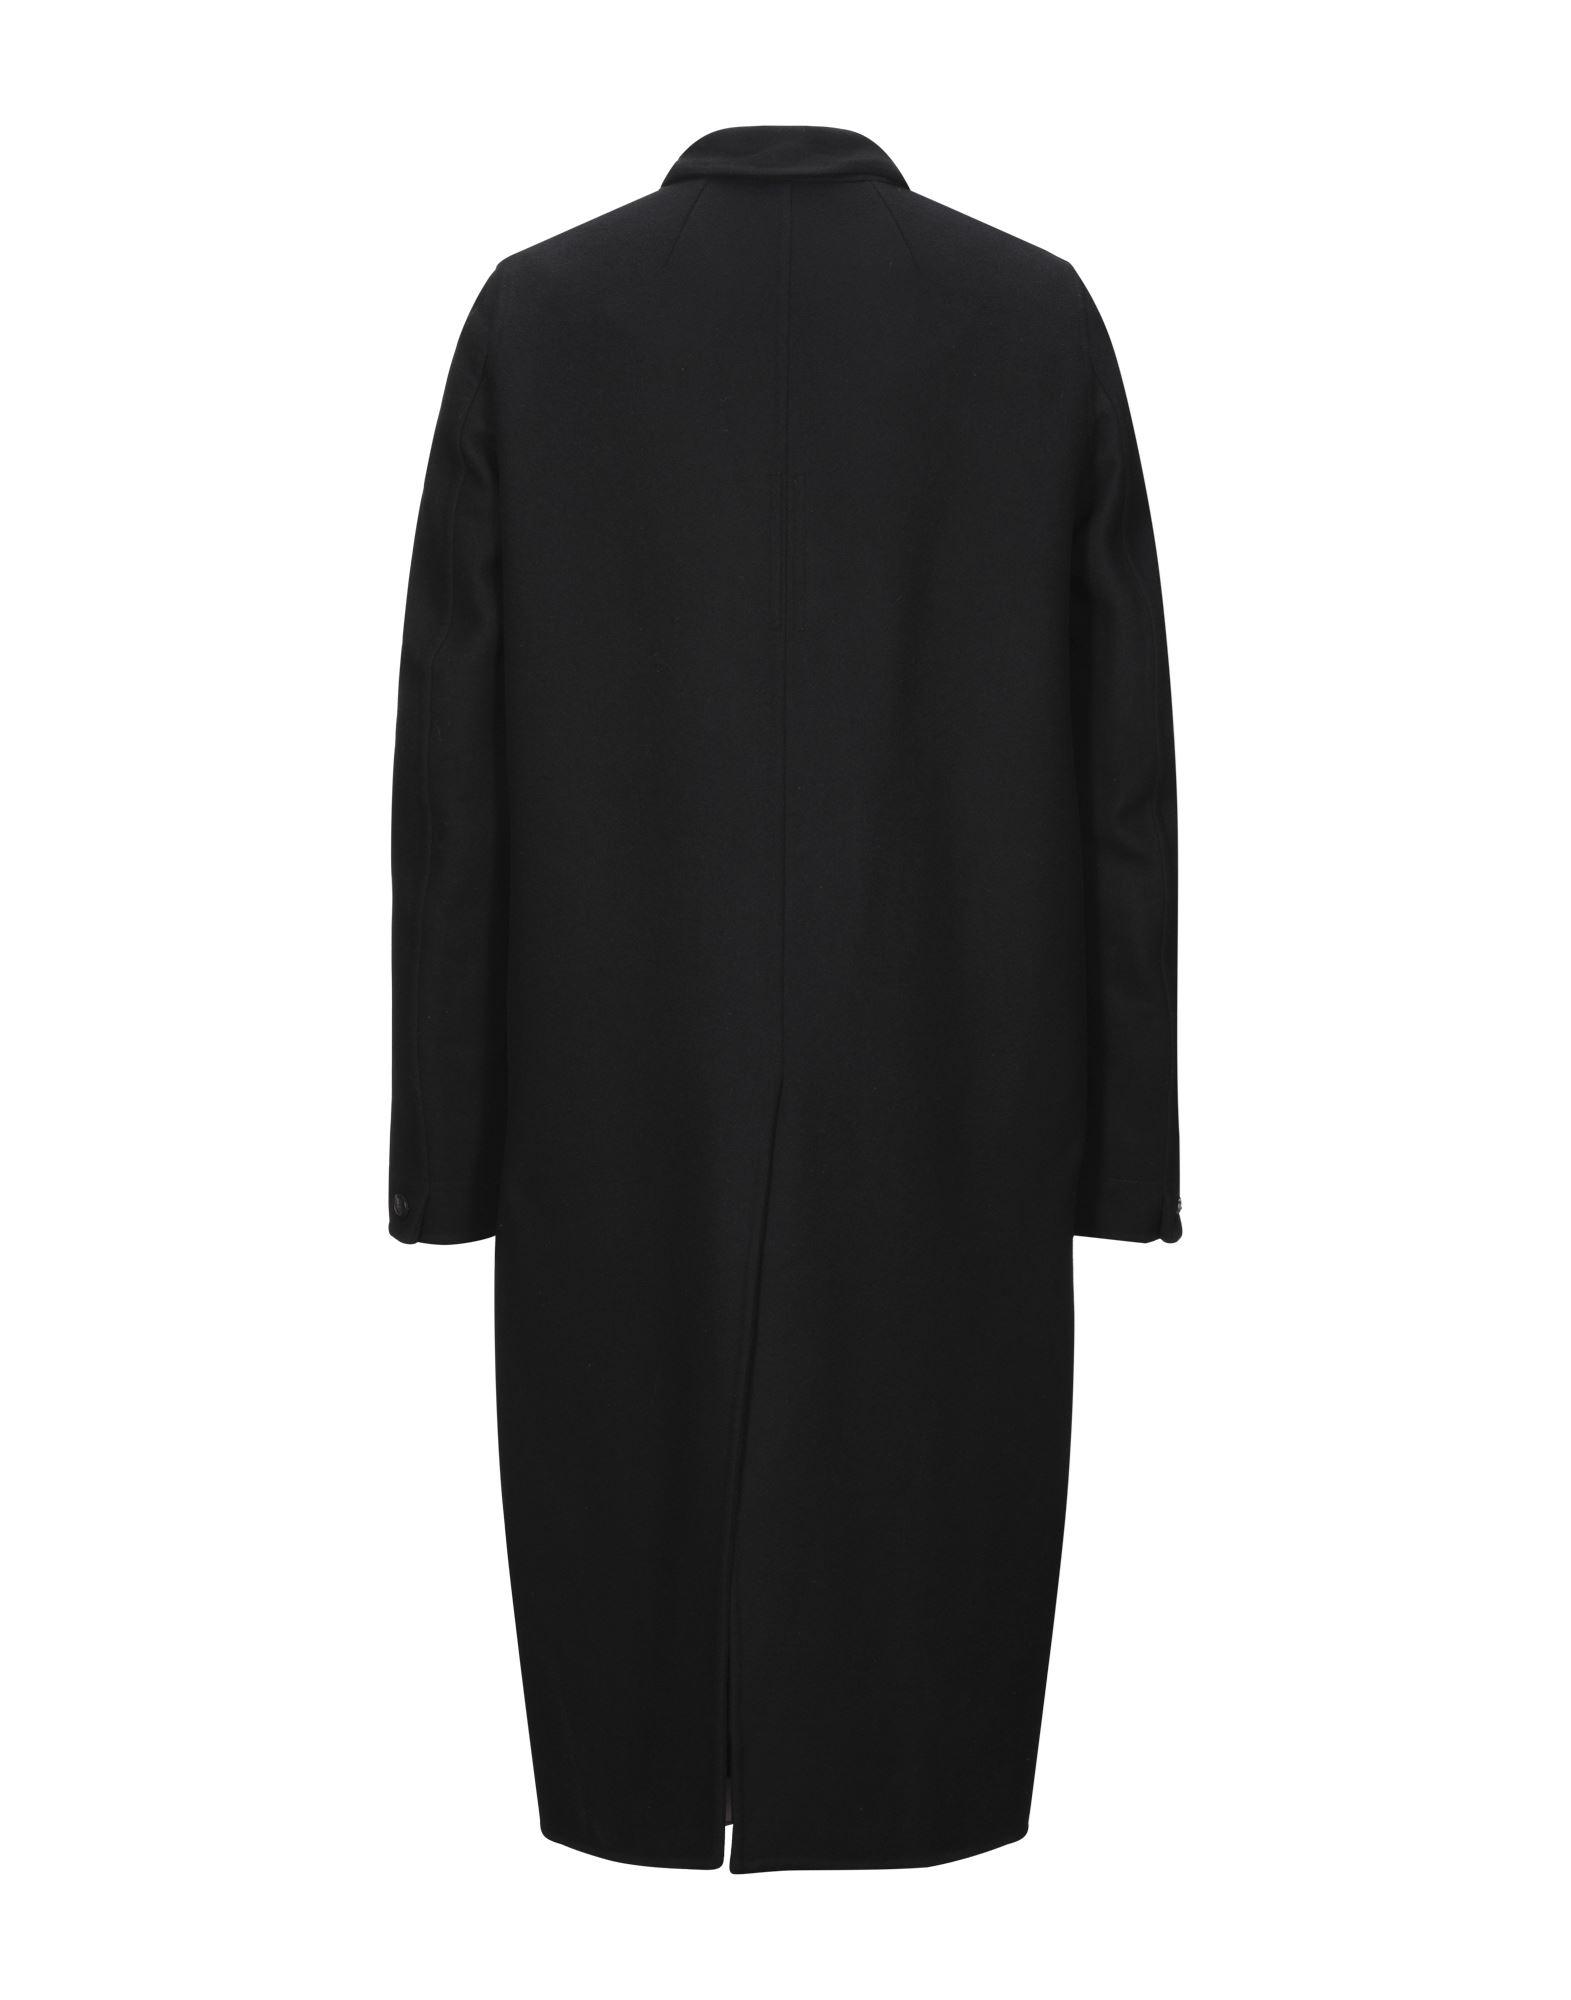 Rick Owens Wool Coat in Black for Men - Lyst